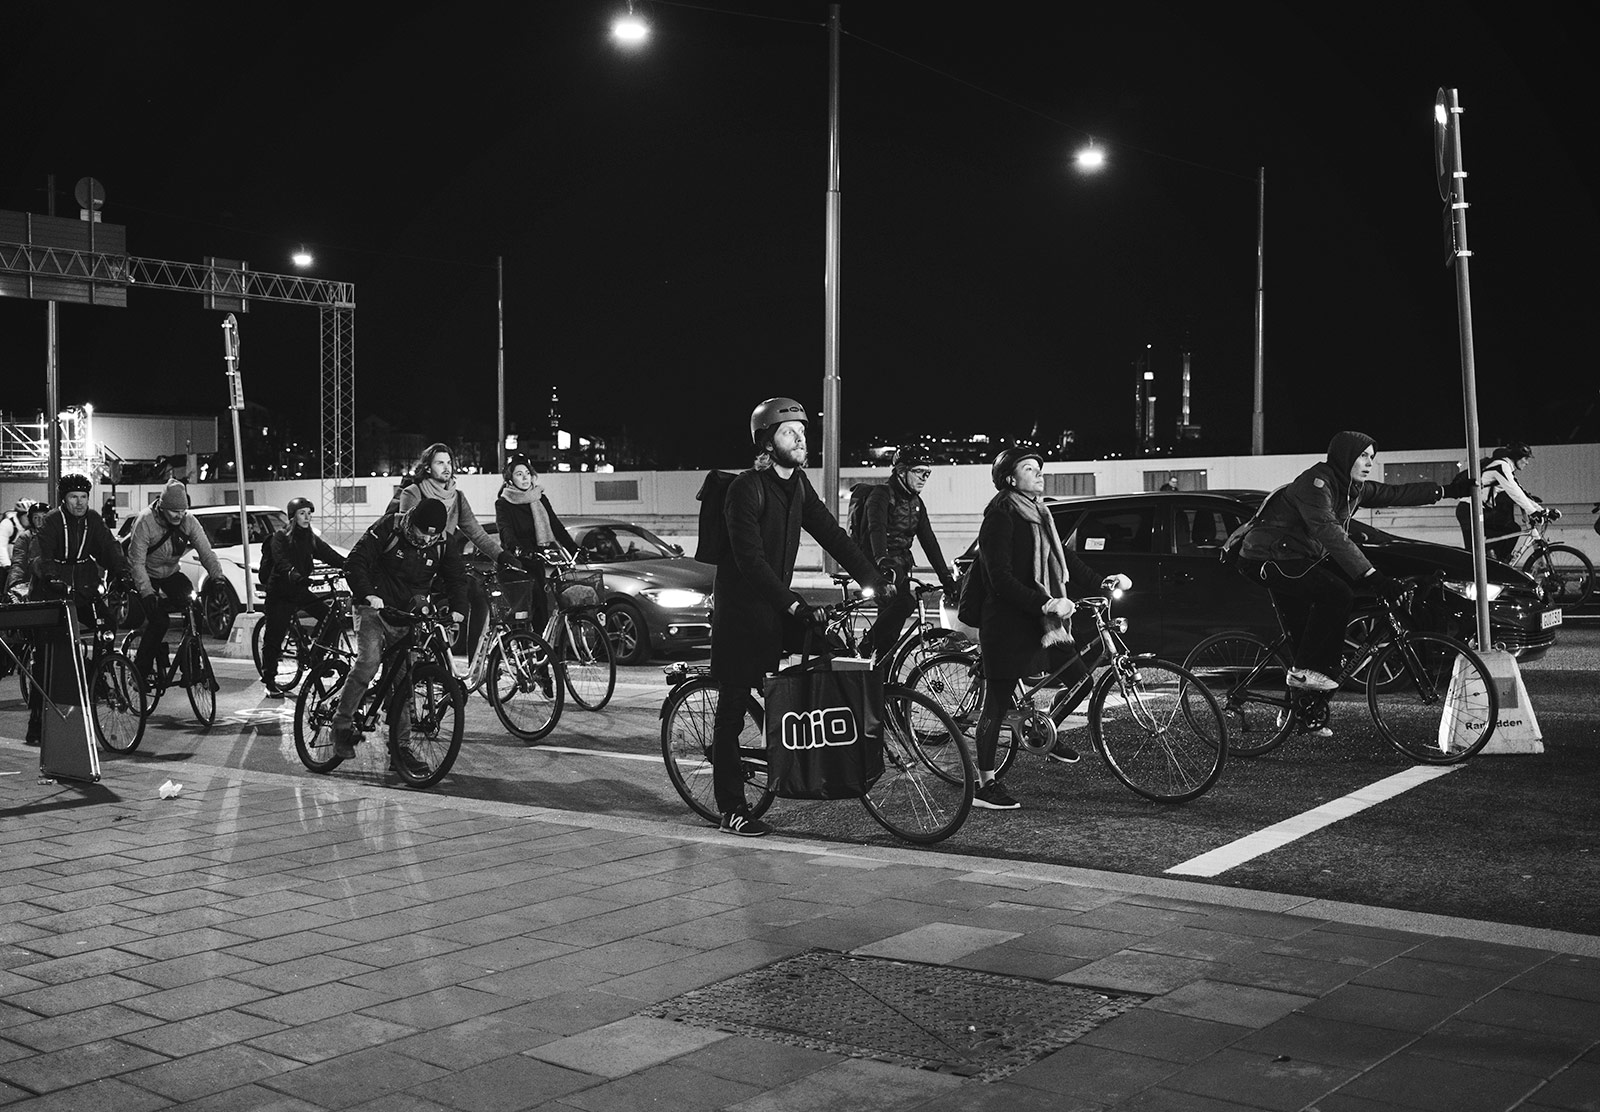 People queueing on bikes